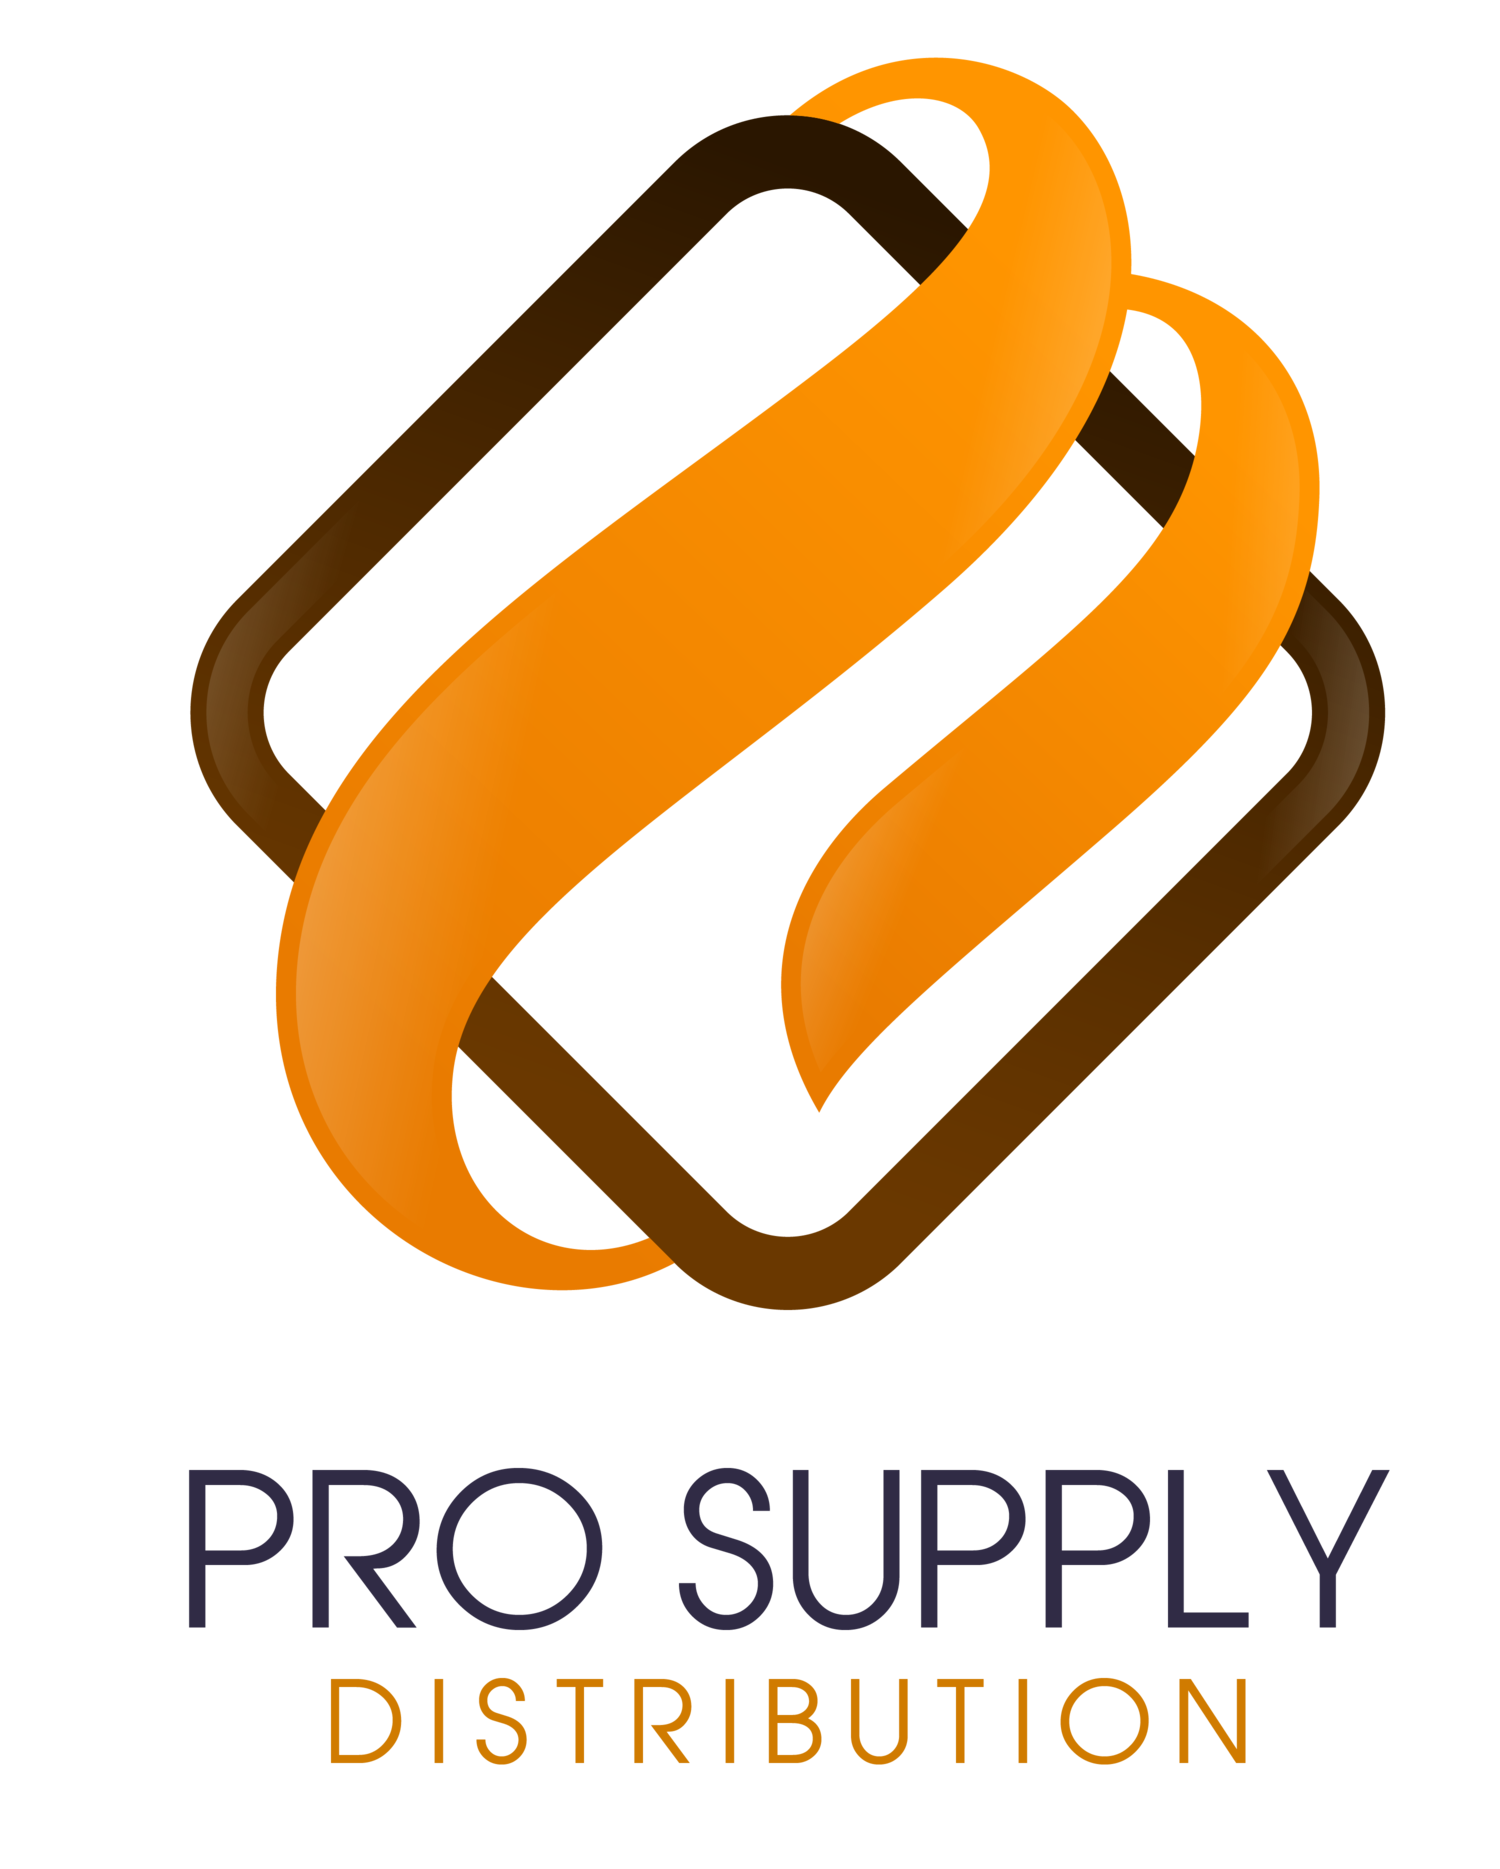 Pro Supply Distribution